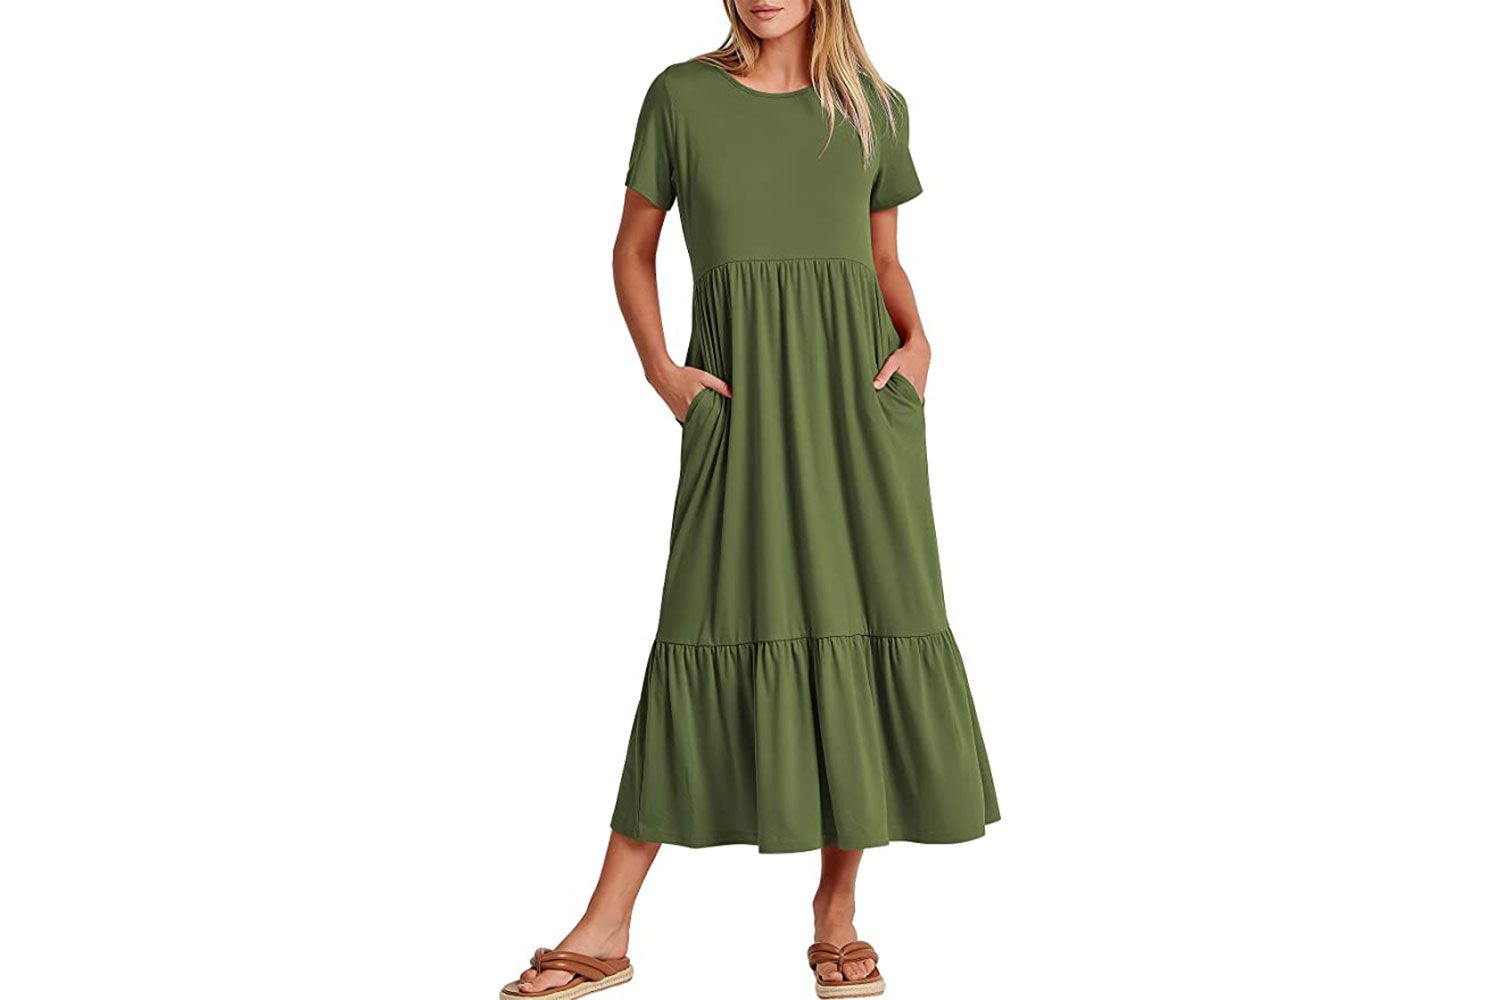 Amazon PD ANRABESS Women's Summer Casual Short Sleeve Crewneck Swing Dress Green